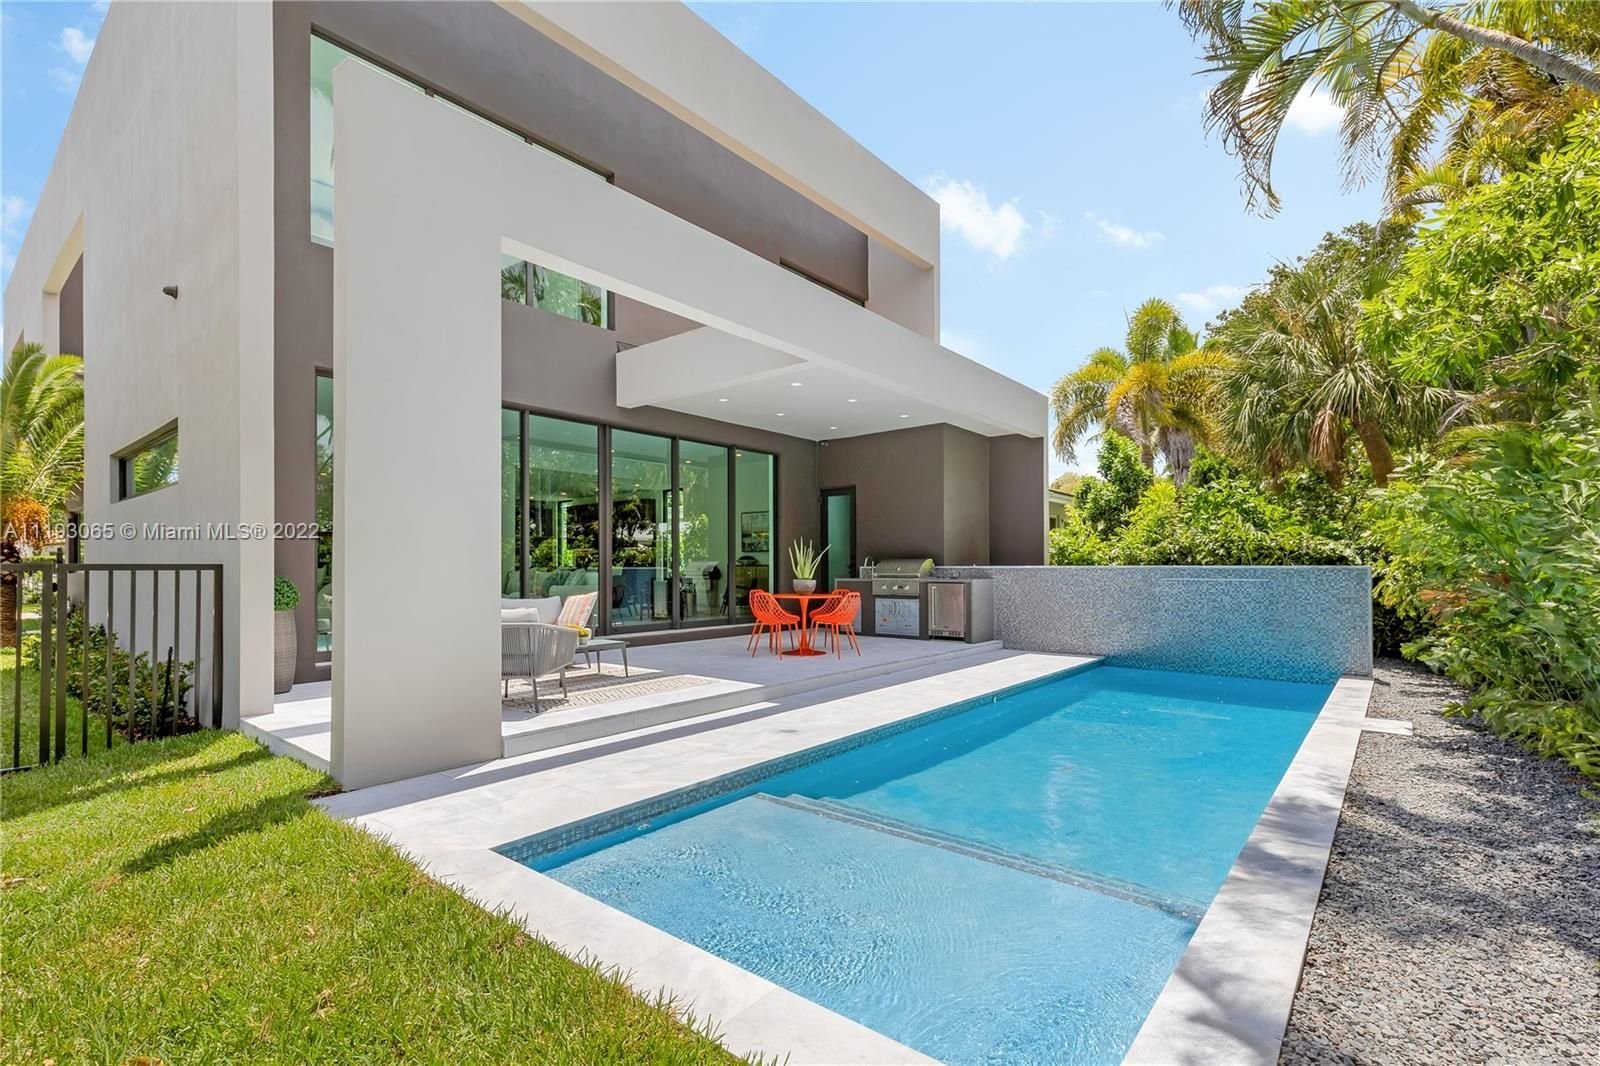 Real estate property located at 3040 Calusa St, Miami-Dade County, Miami, FL